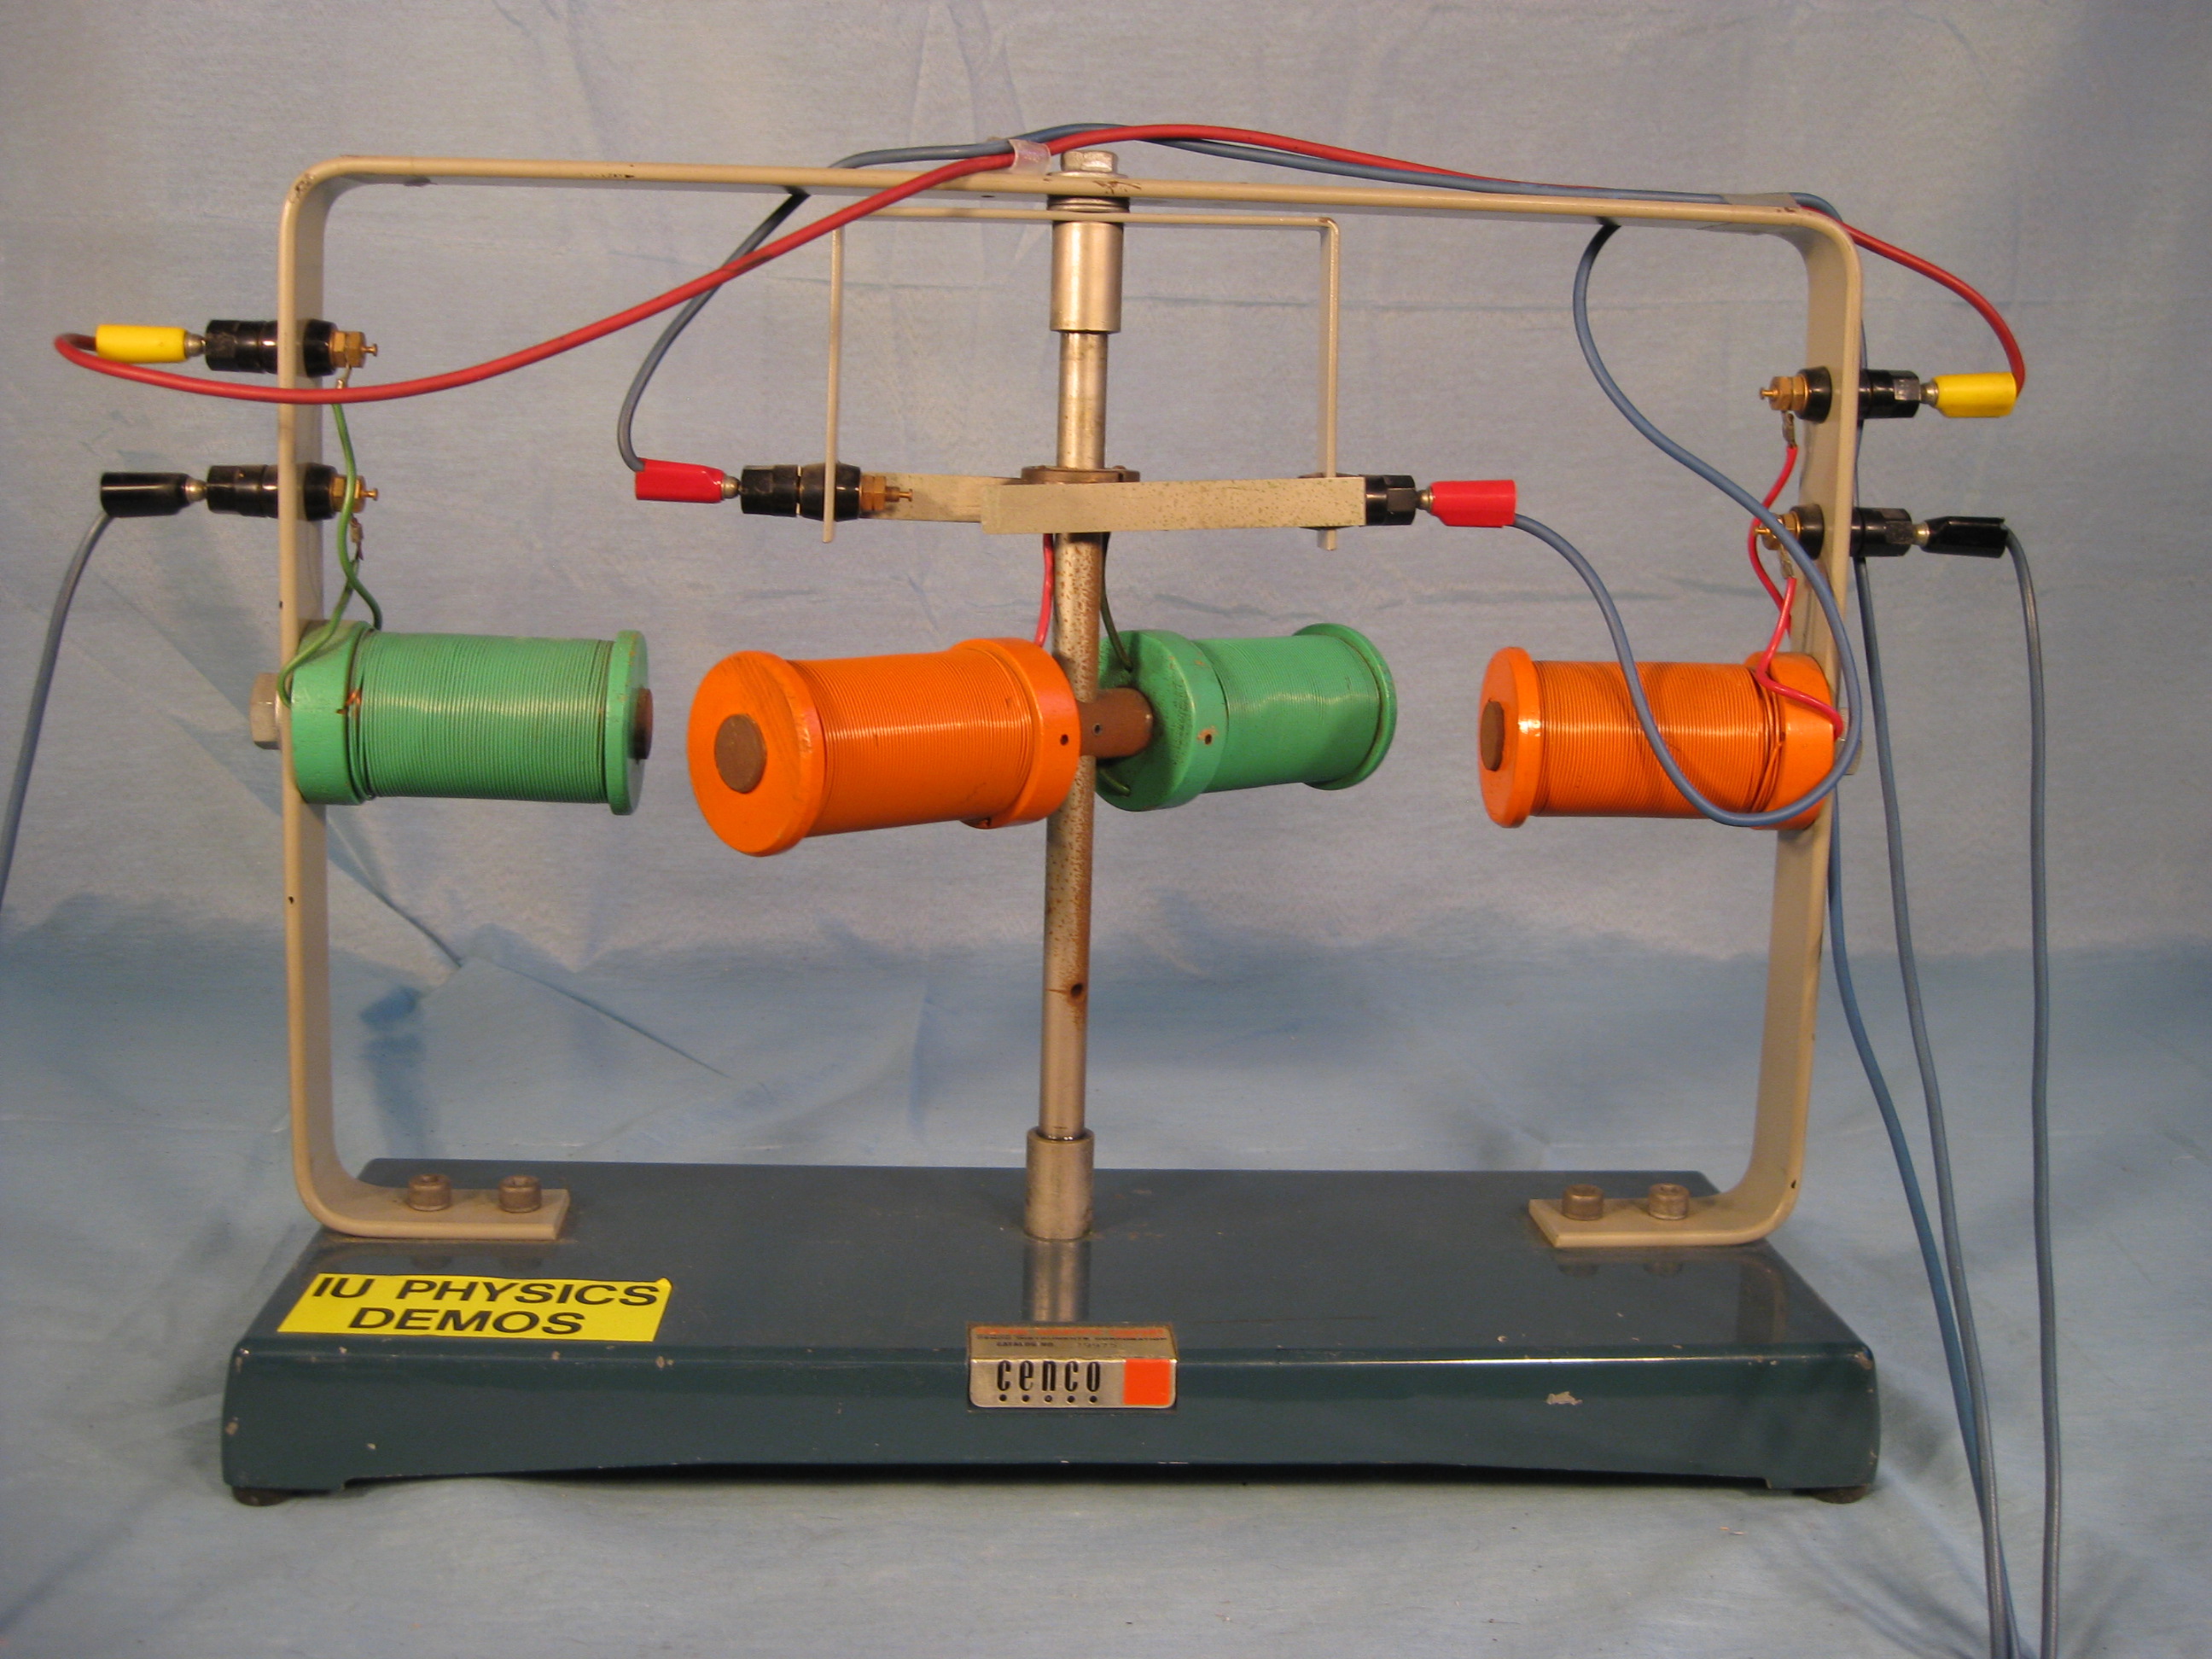 Demonstration motor and generator. 1